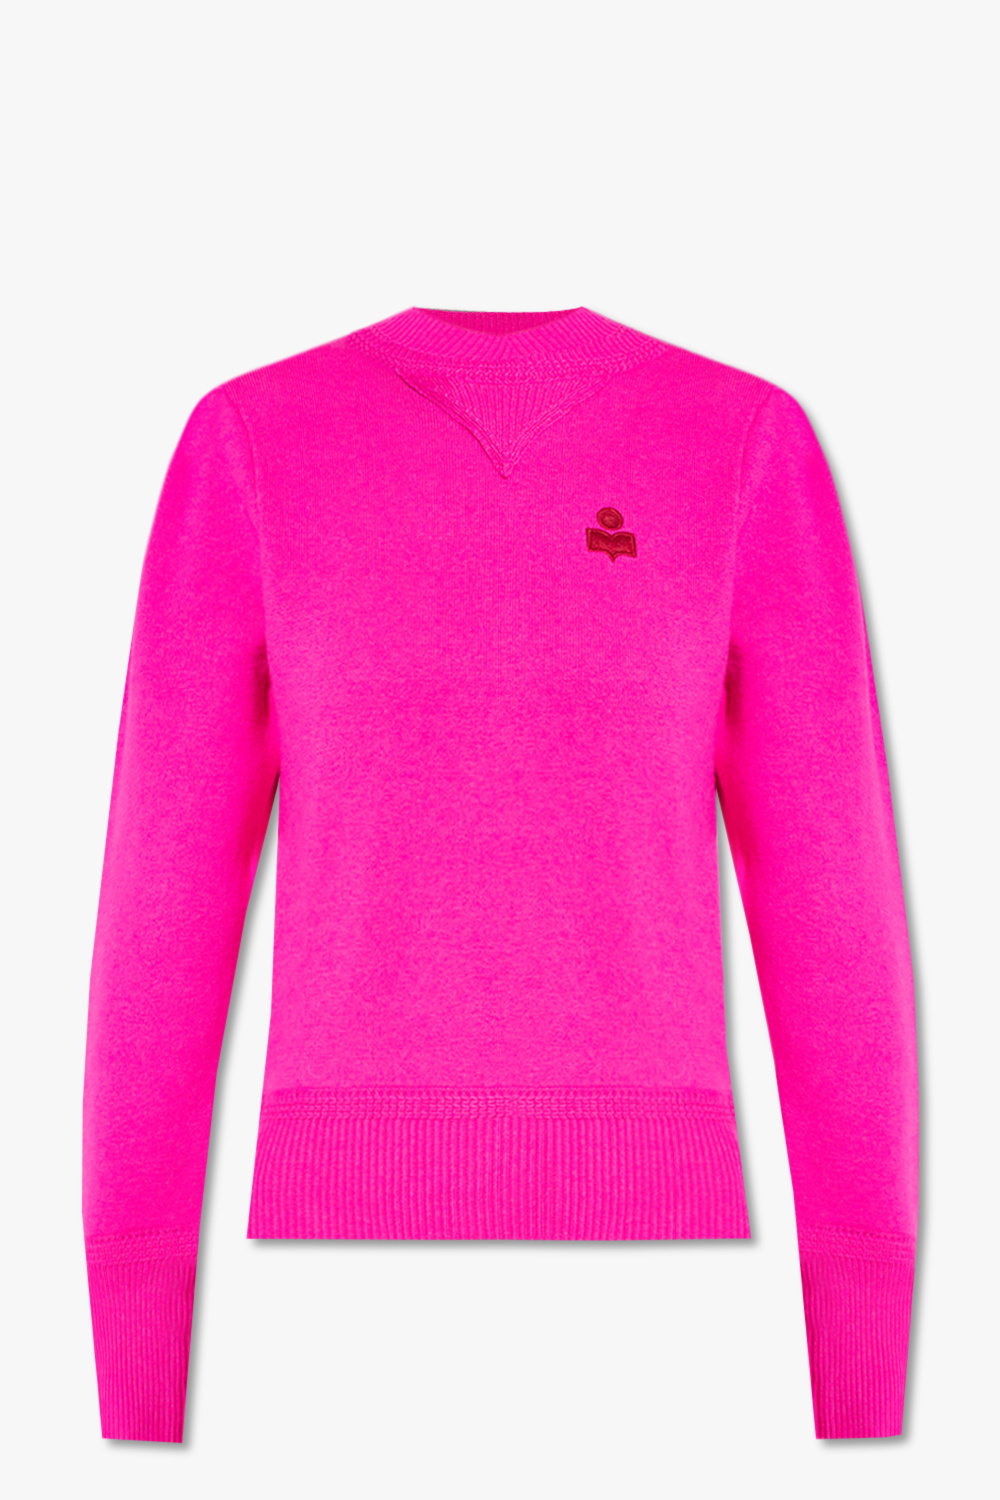 Marant Etoile ‘Kelaya’ sweater